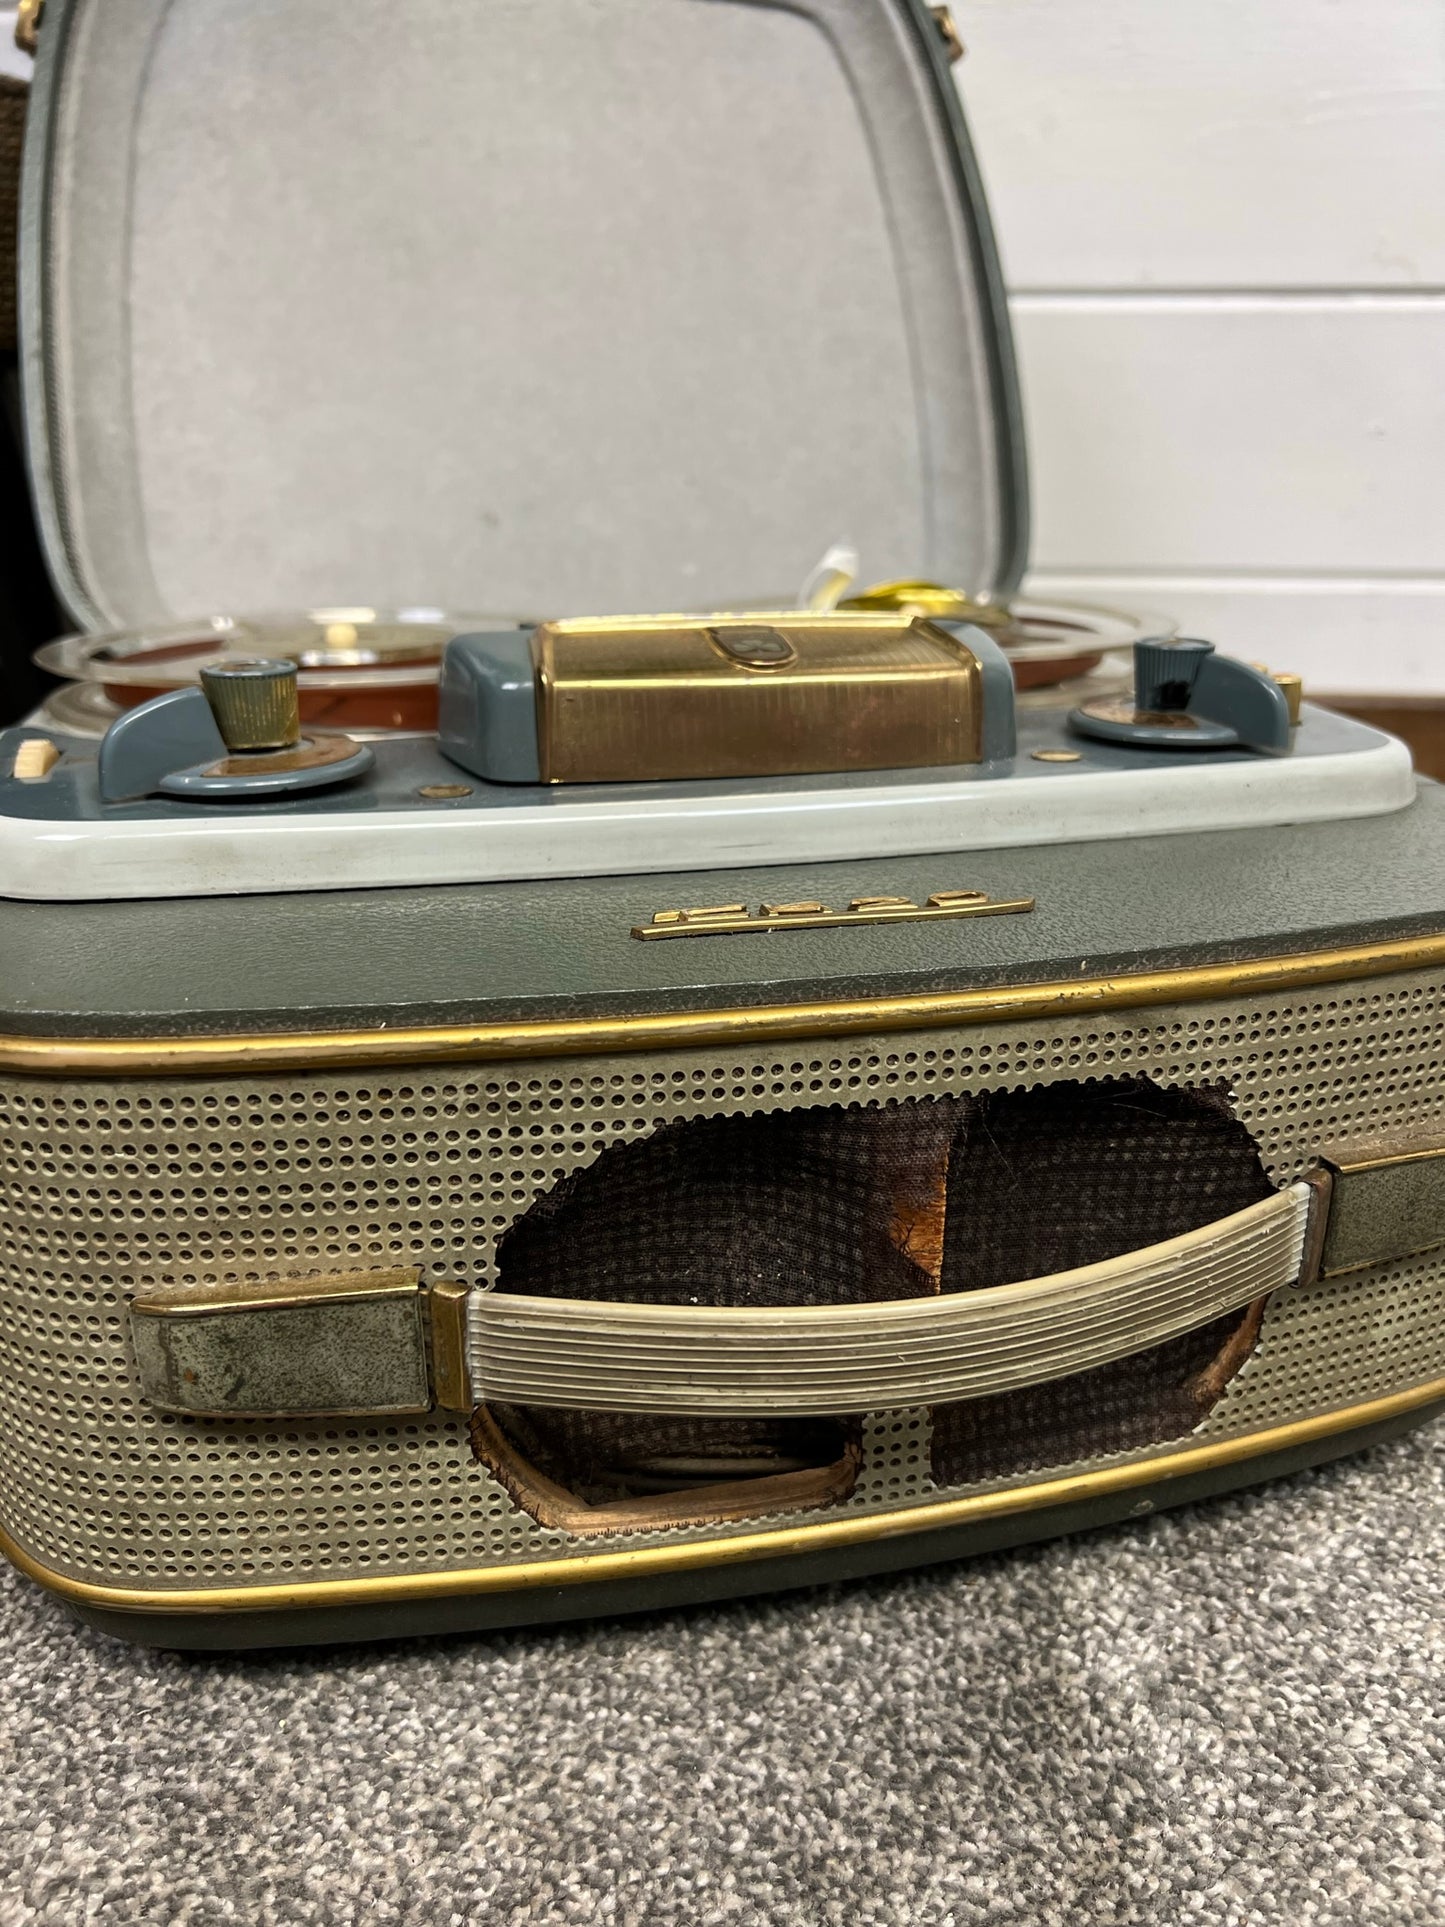 Vintage Grundig TK20 Reel to Reel Tape Recorder Player Working 50's 60's Retro Decor